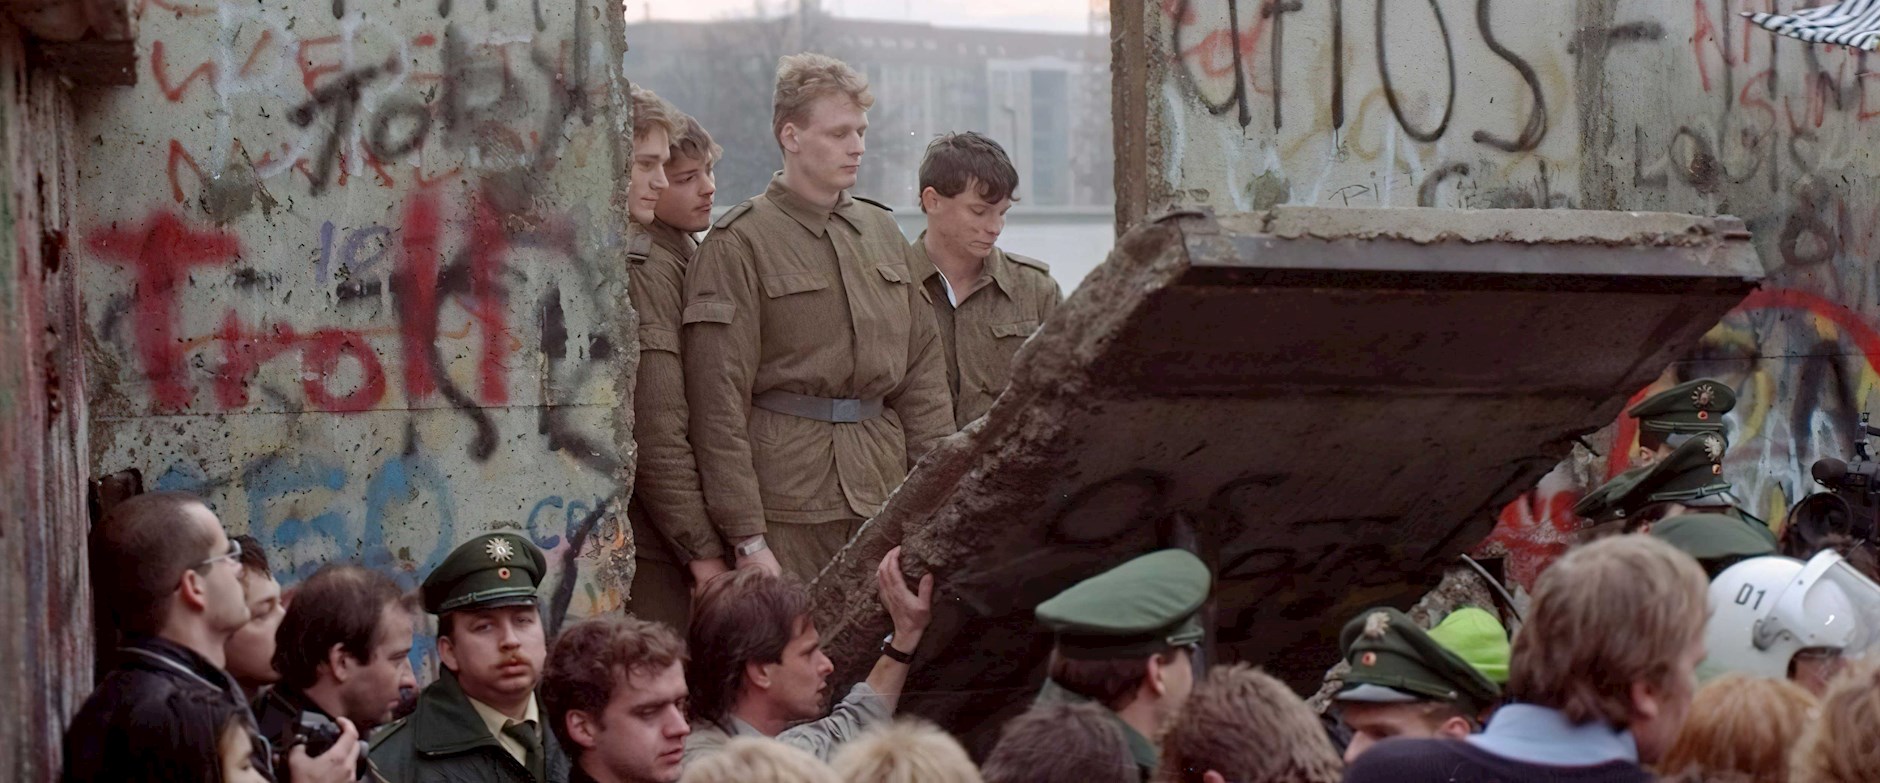 Berlin wall falling